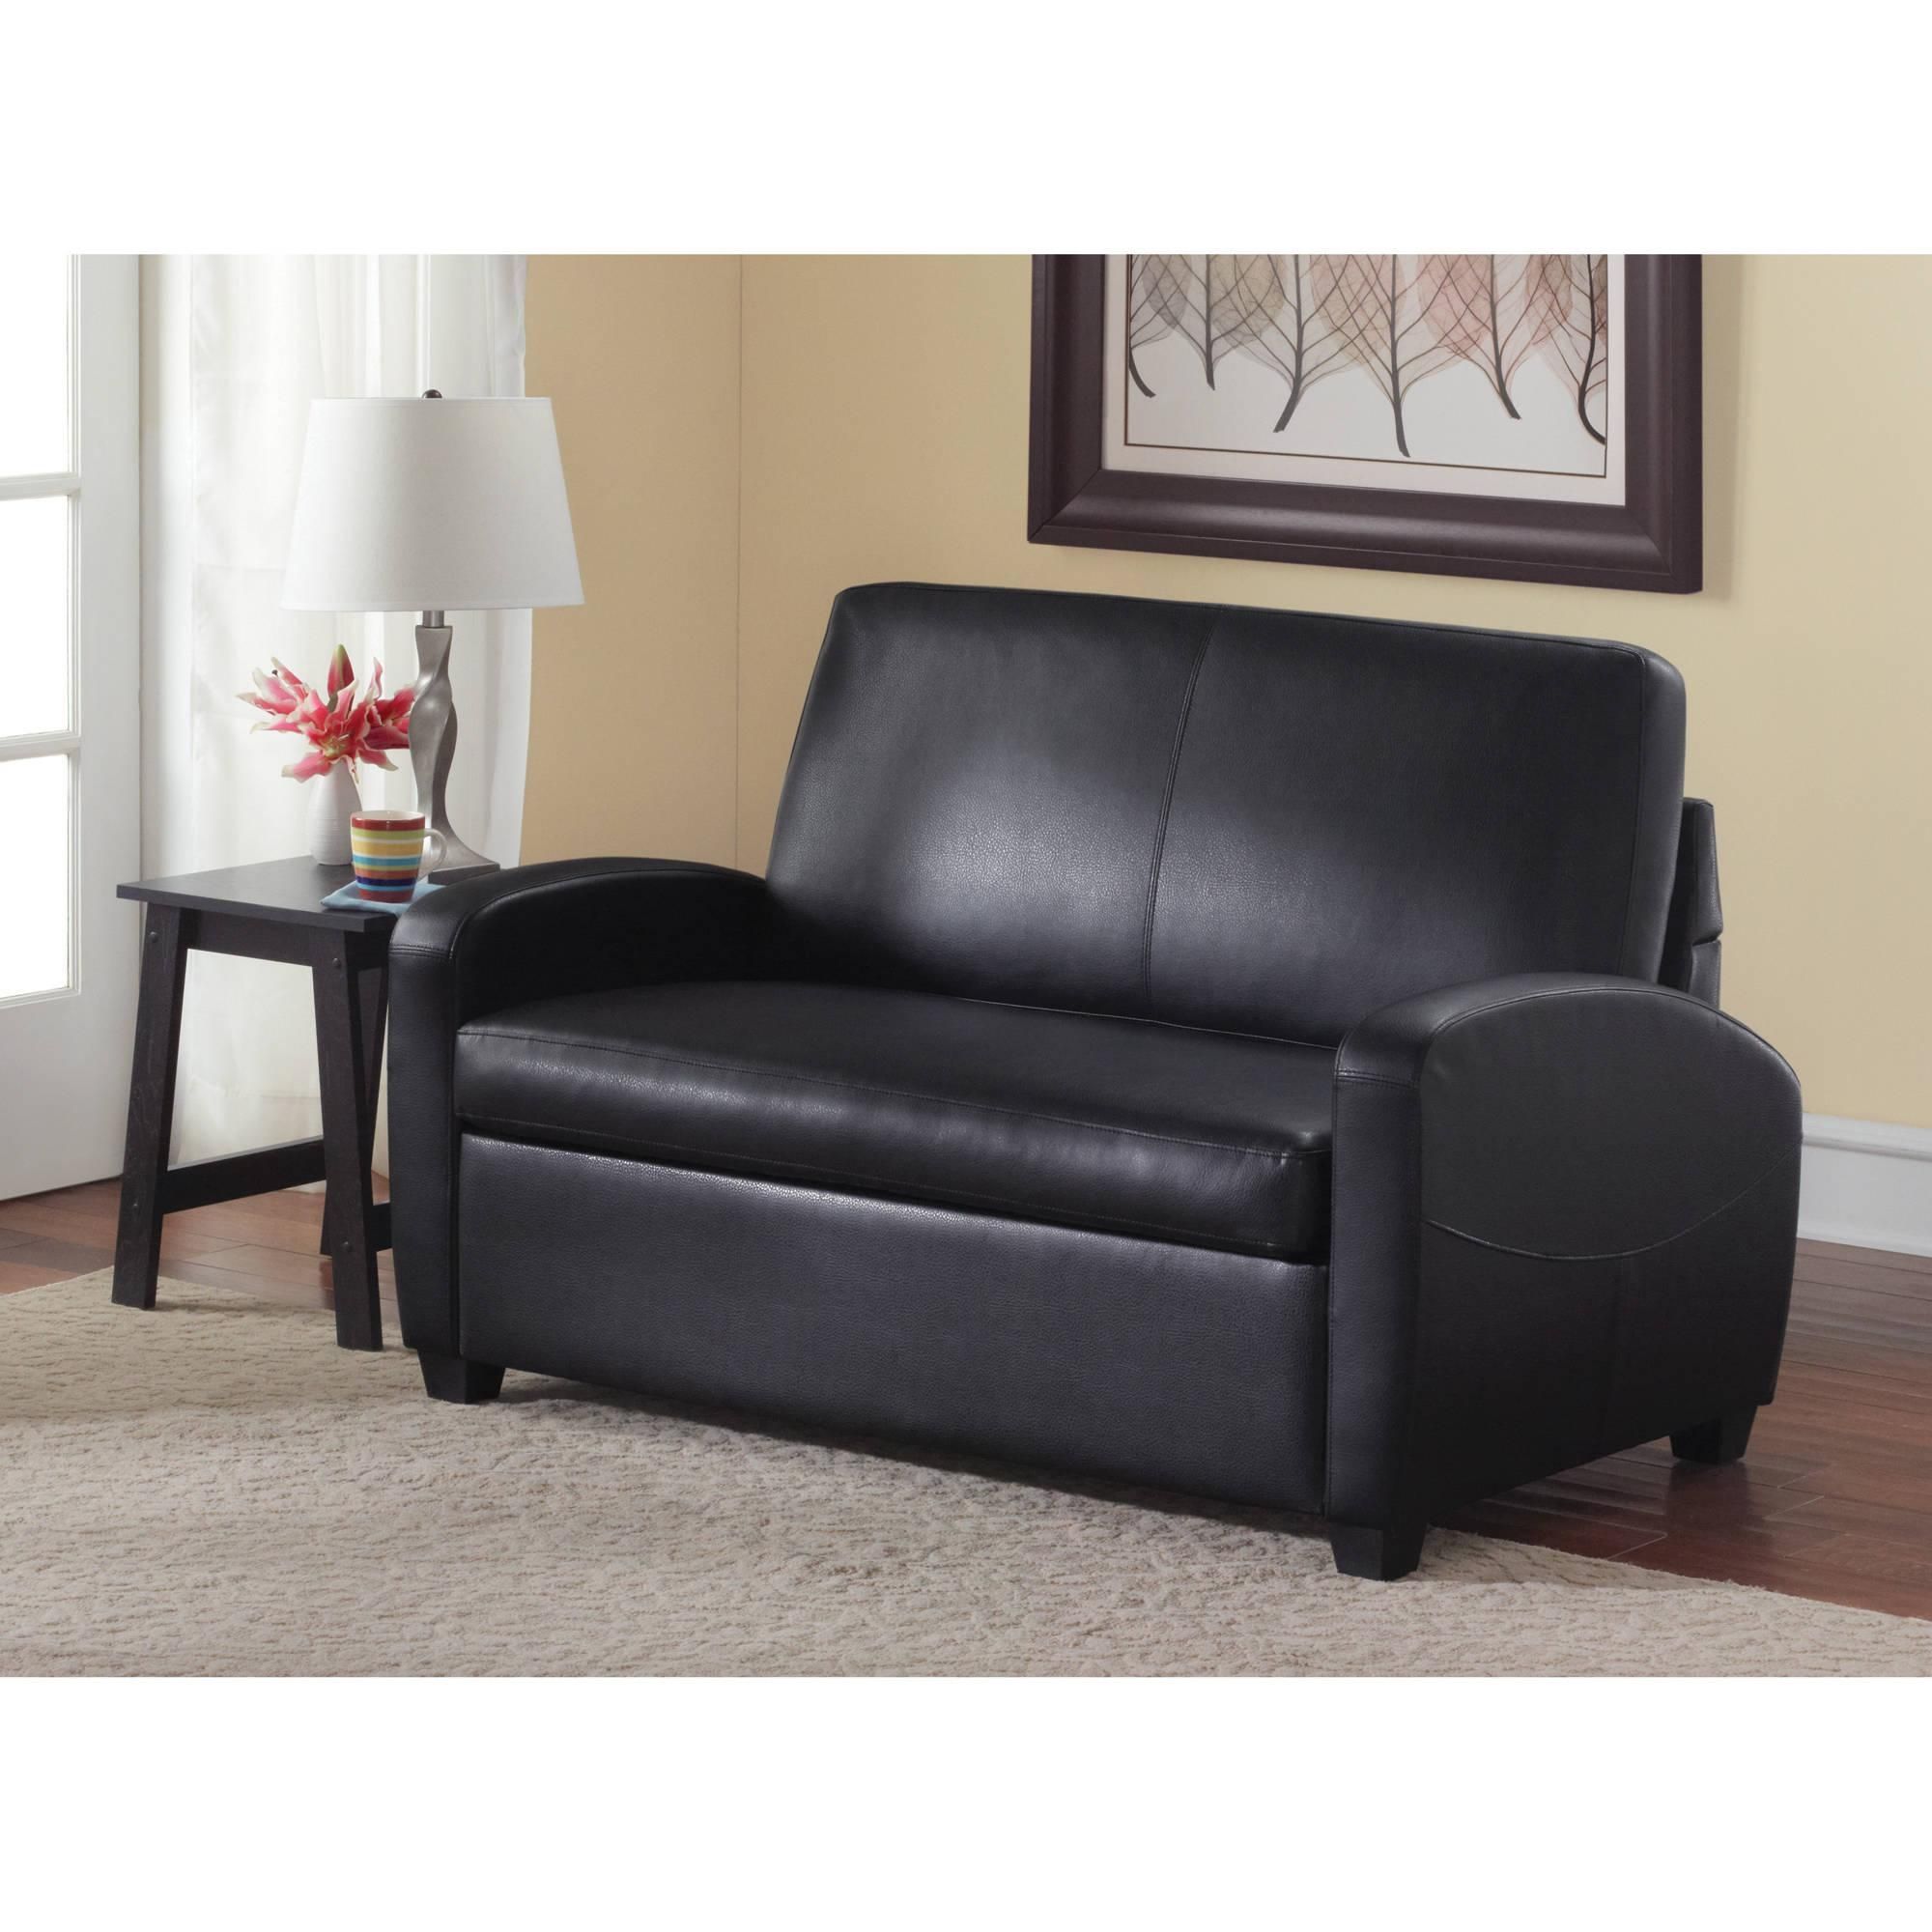 Furniture: Leather Futon Walmart | Futons At Kmart | Futon Full Size Regarding Kmart Futon Beds (View 5 of 20)